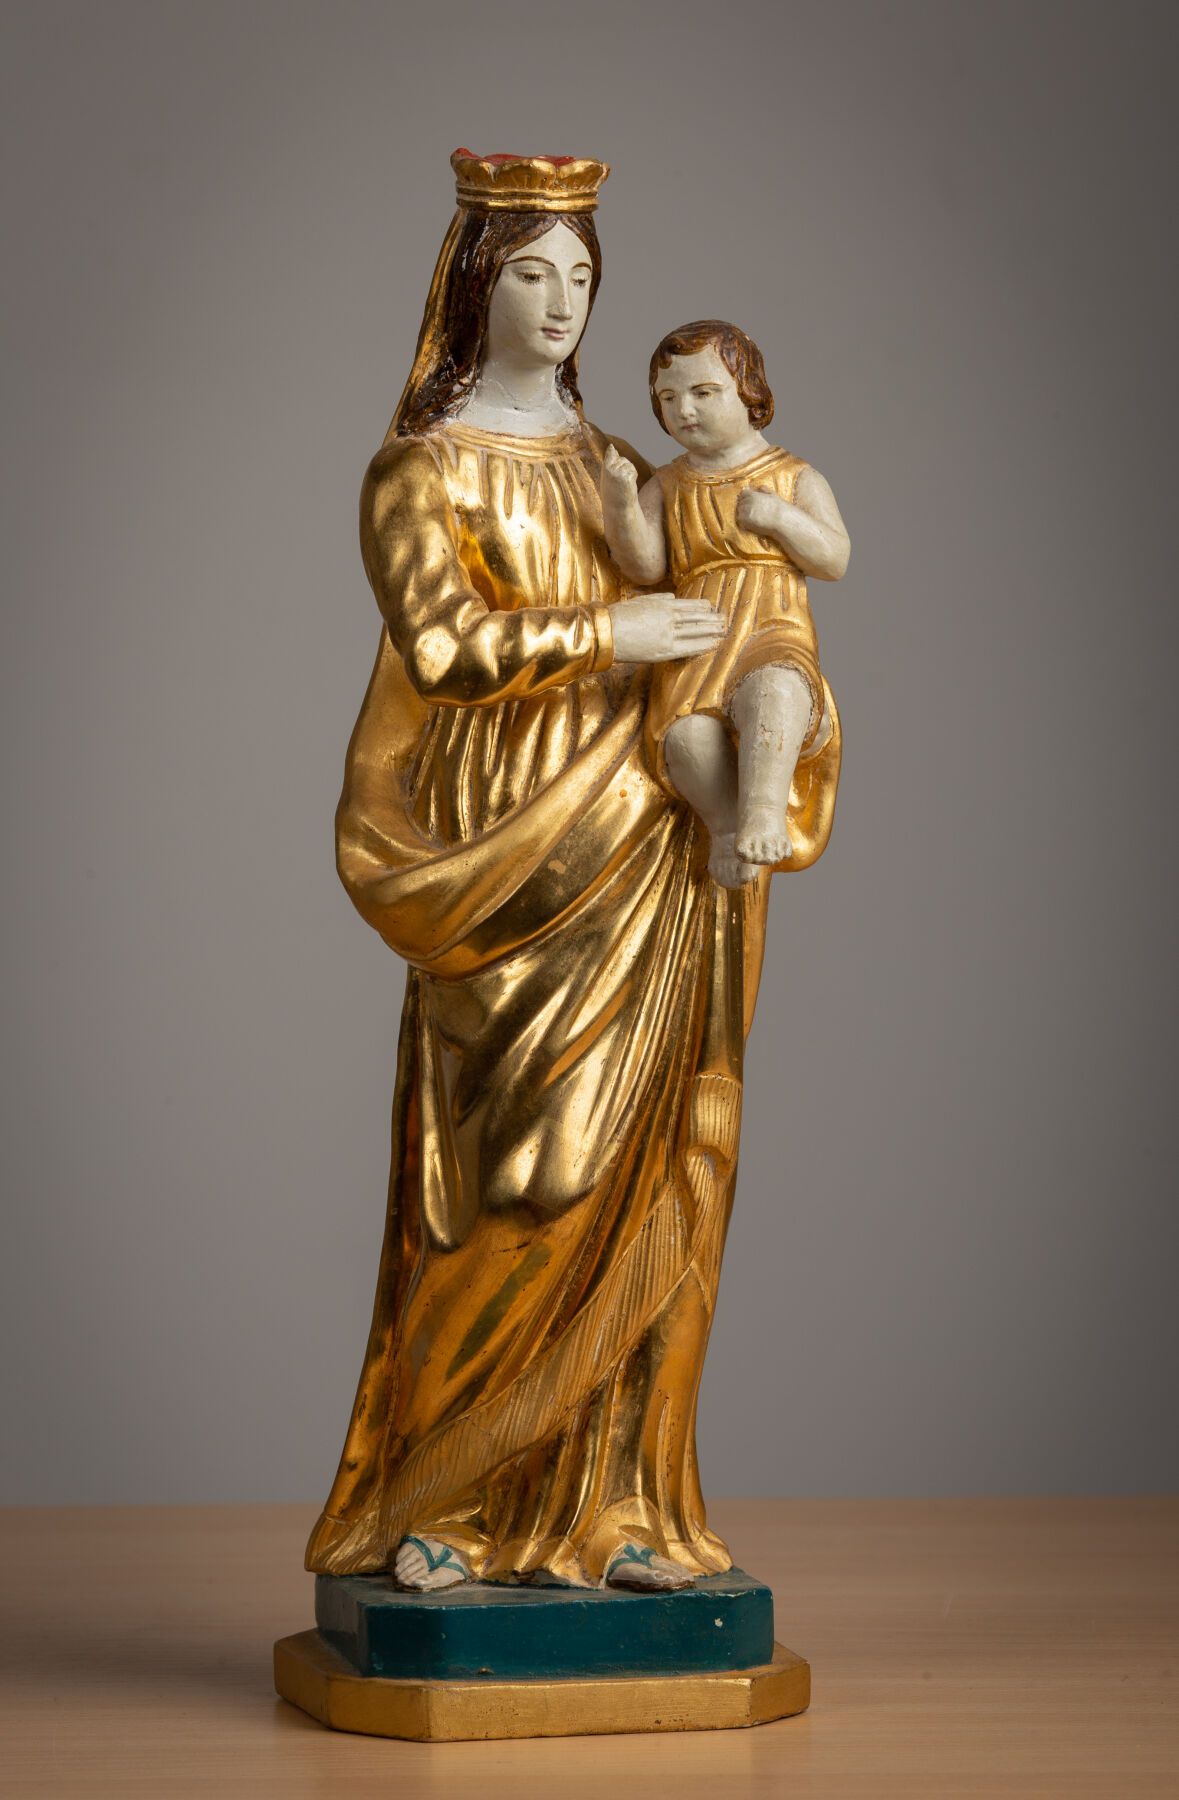 Null 灰泥多色和镀金木材的圣母和儿童。 
19世纪的南方作品。
高_40厘米，圣母的头和基督的腿被重新粘在一起